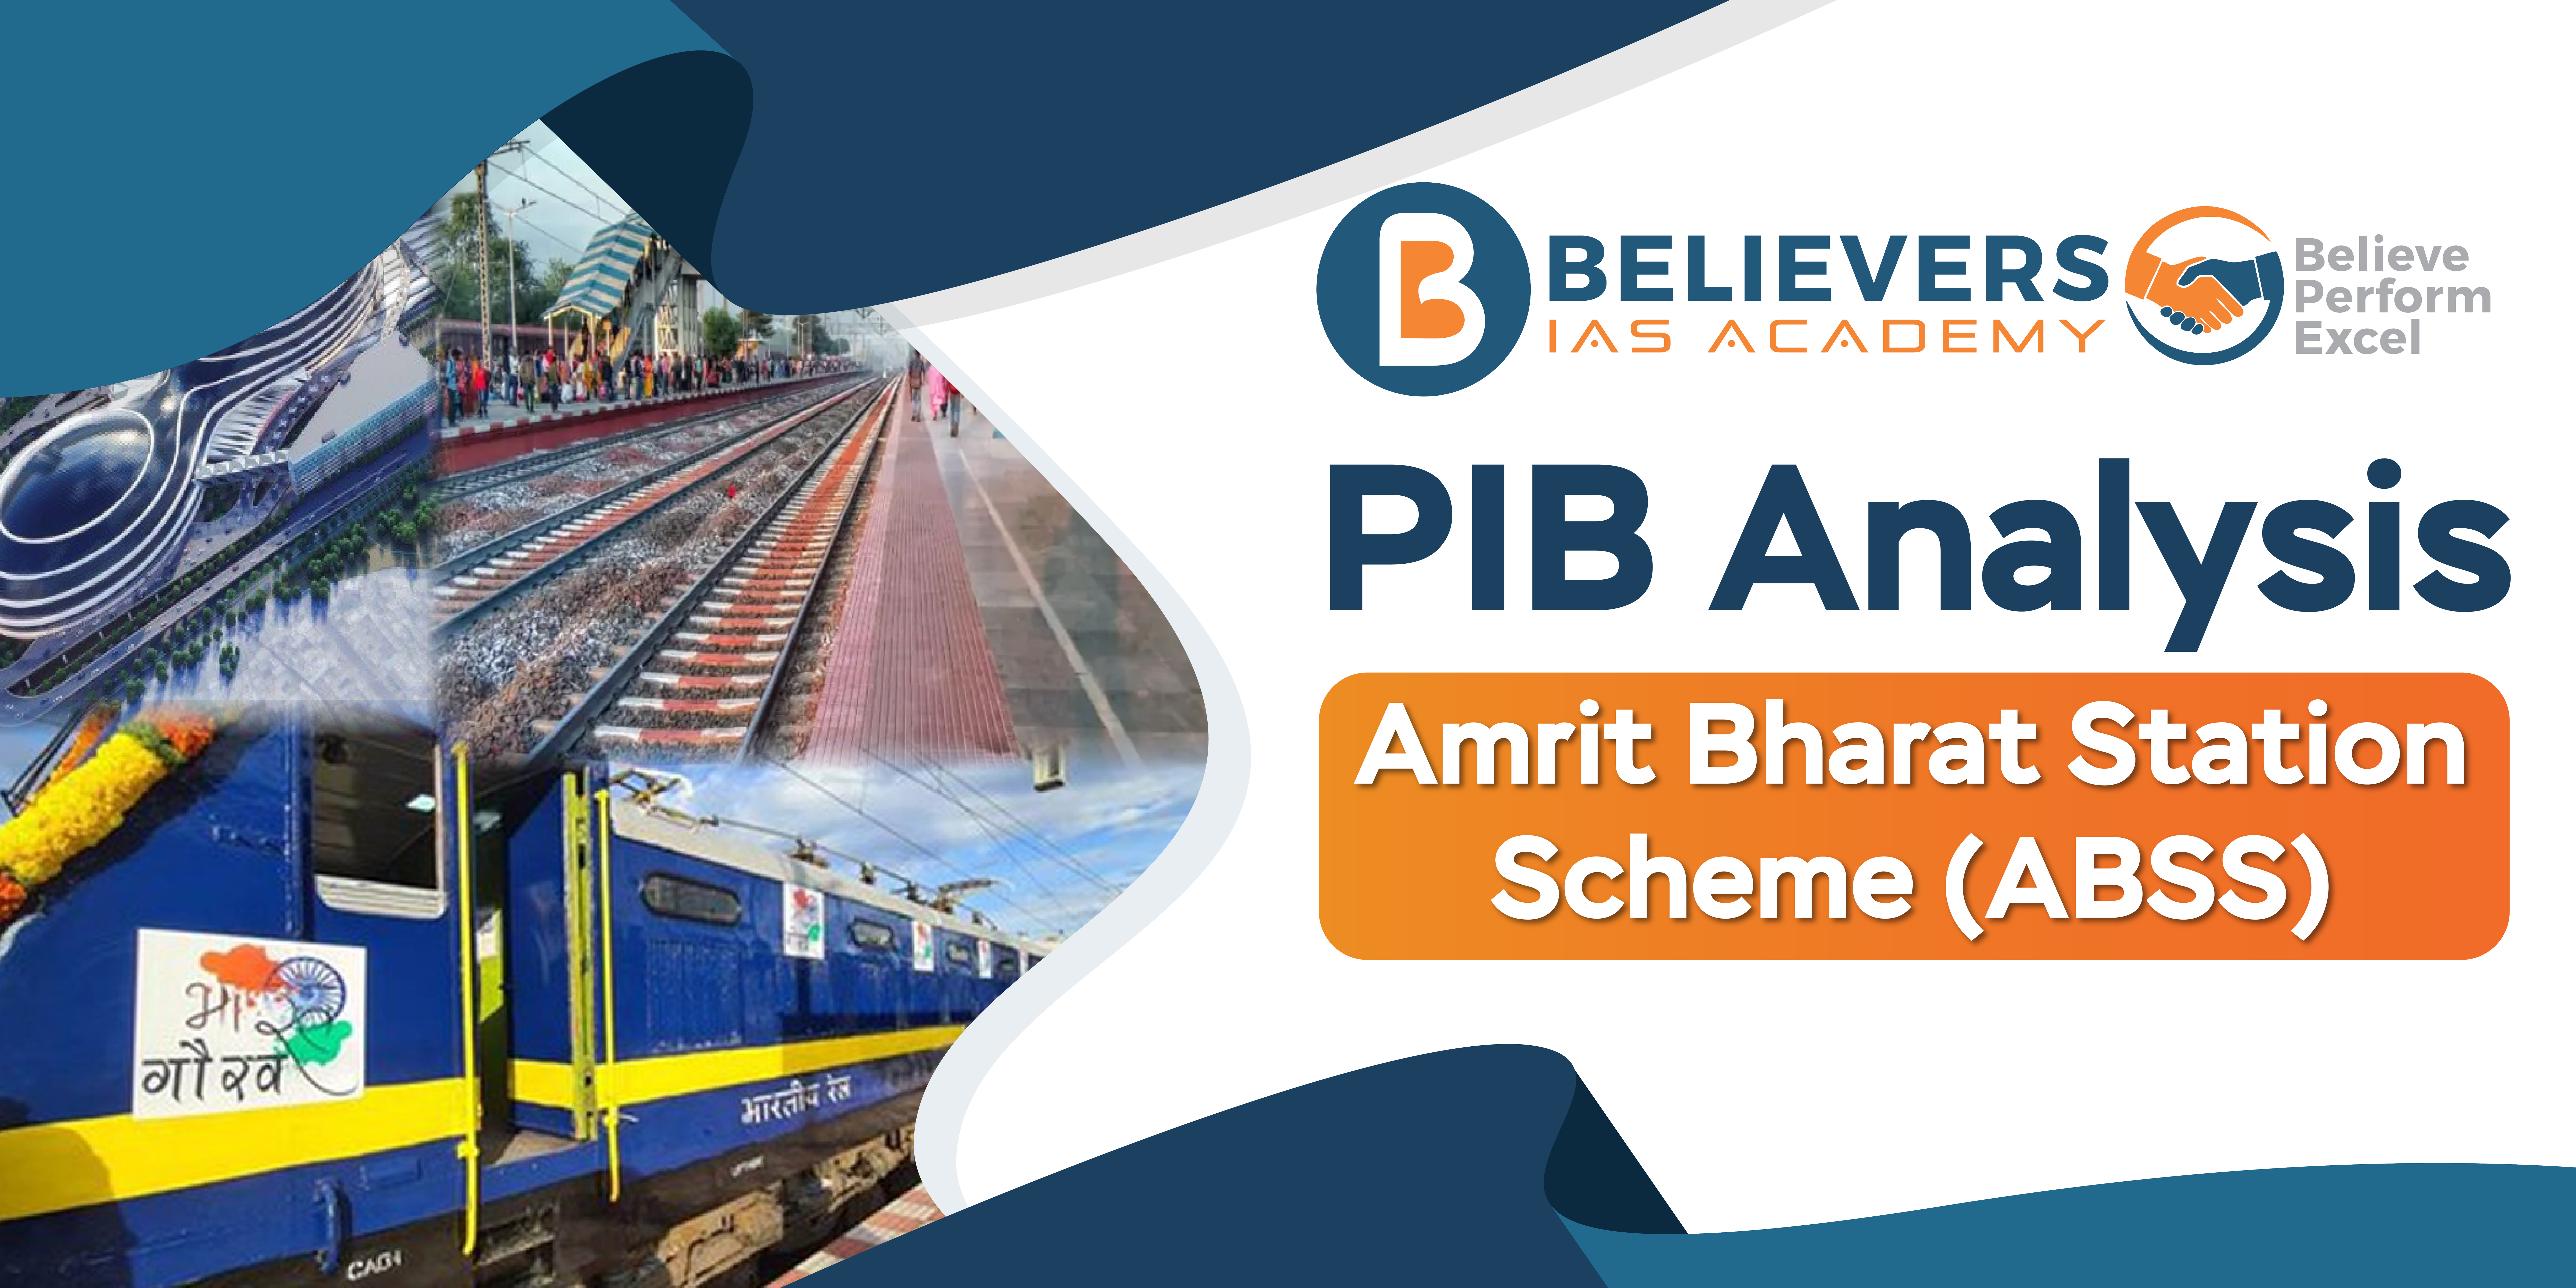 Amrit Bharat Station Scheme (ABSS): An Overview